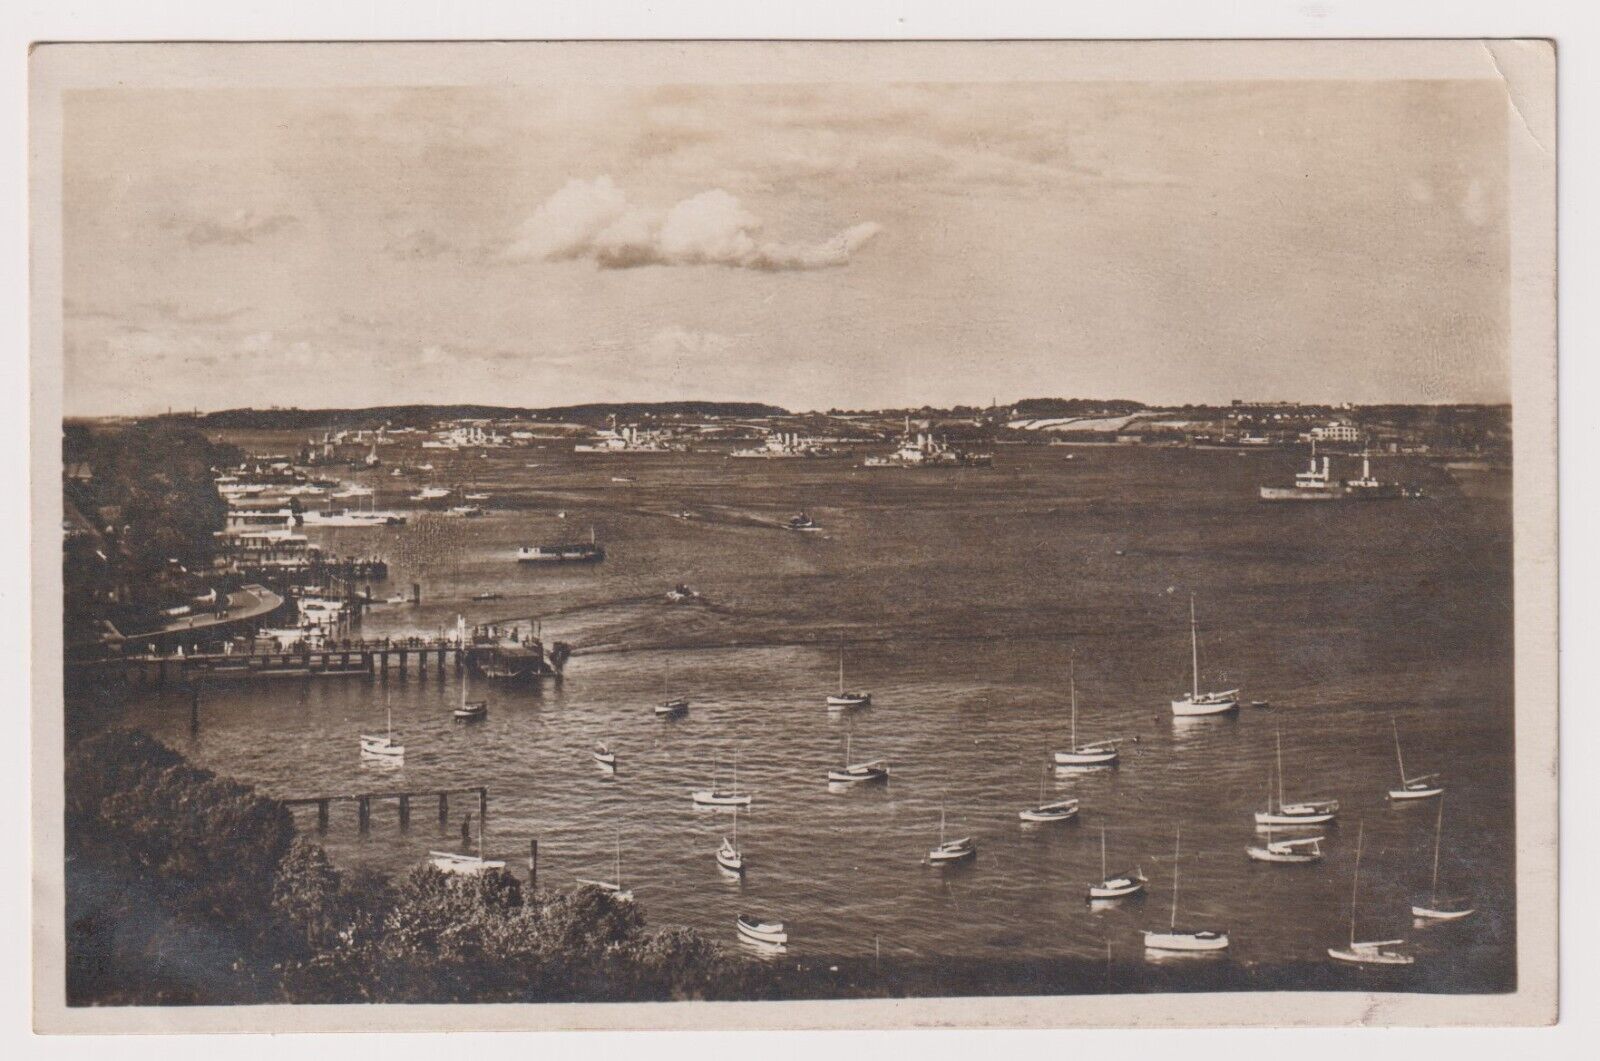 1930 RPPC Postcard View of Boats Ships in Harbor Kiel Germany